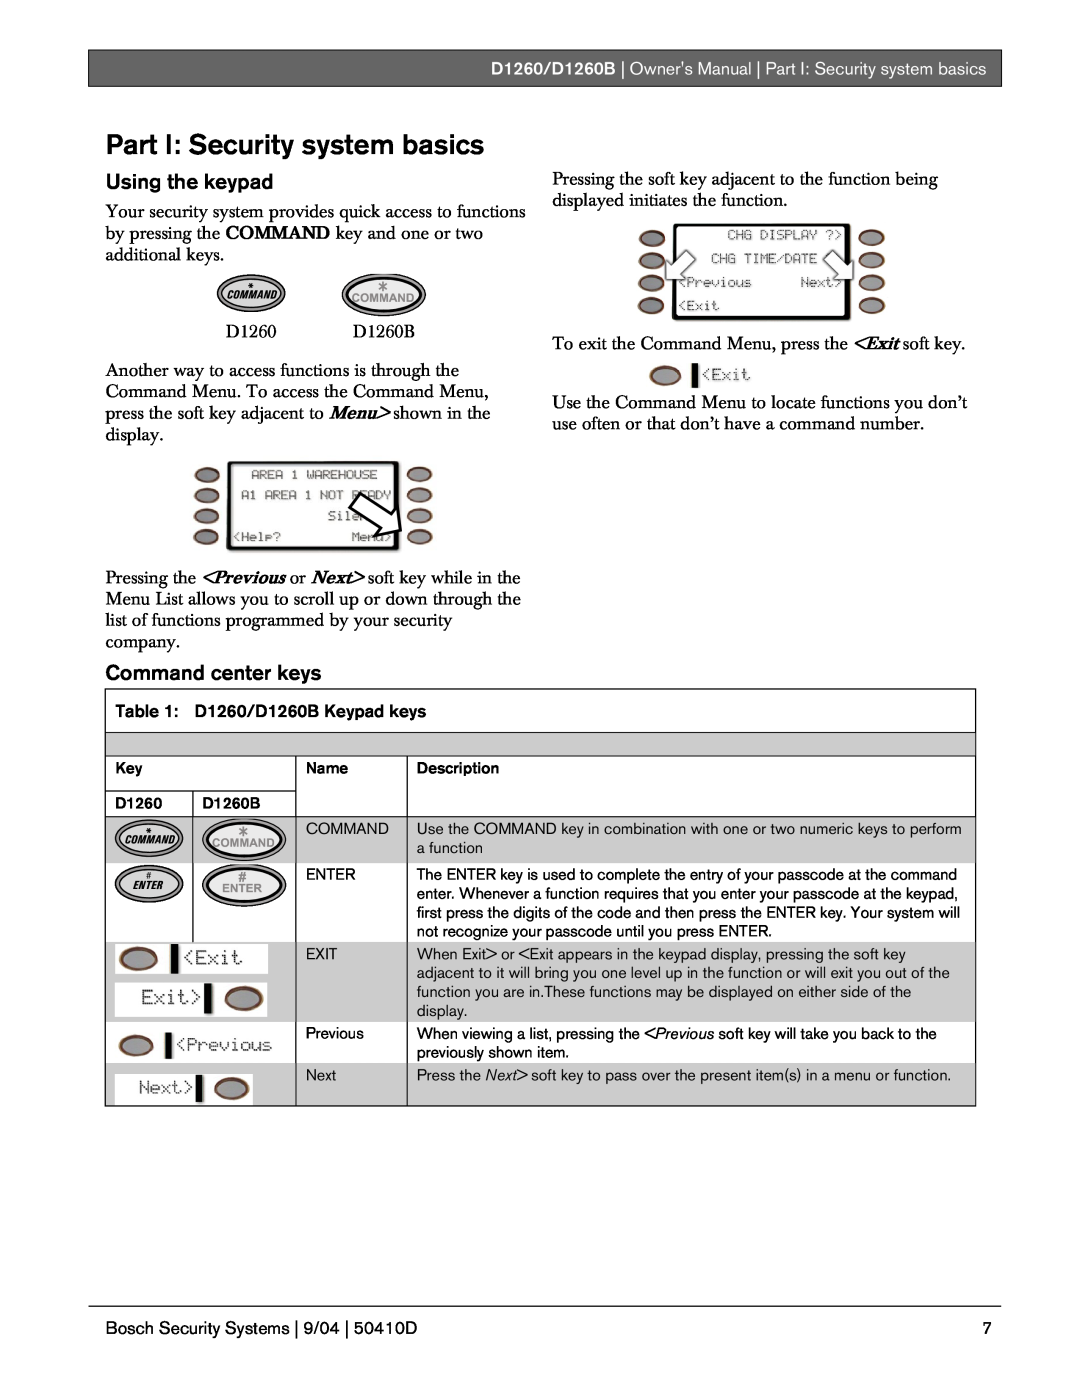 Bosch Appliances D1260B owner manual Part I Security system basics, Using the keypad, Command center keys 